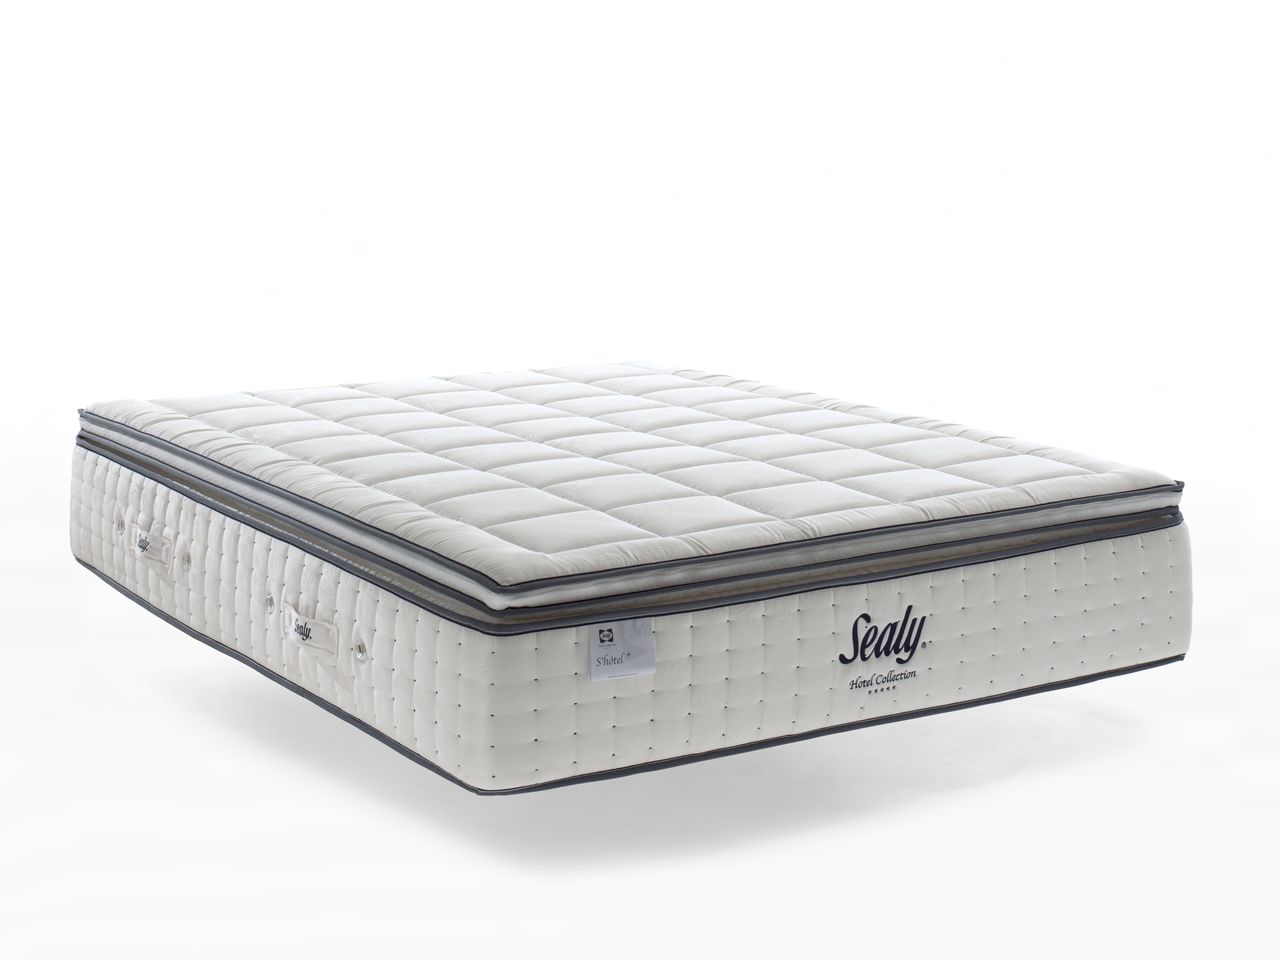 sealy hotel quality mattress